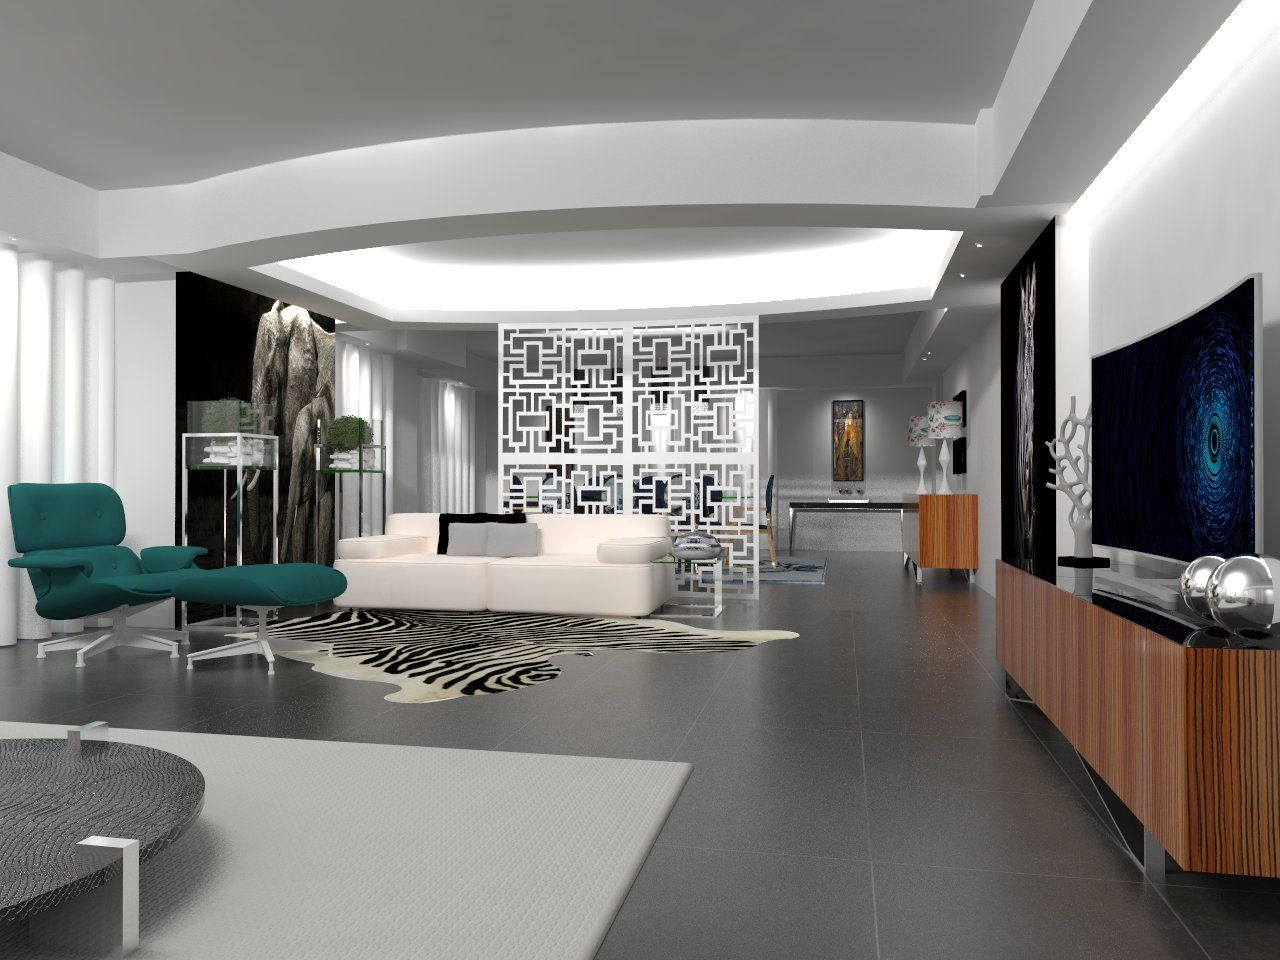 Apartamento no centro de Lisboa , Angelourenzzo - Interior Design Angelourenzzo - Interior Design Tropical style living room